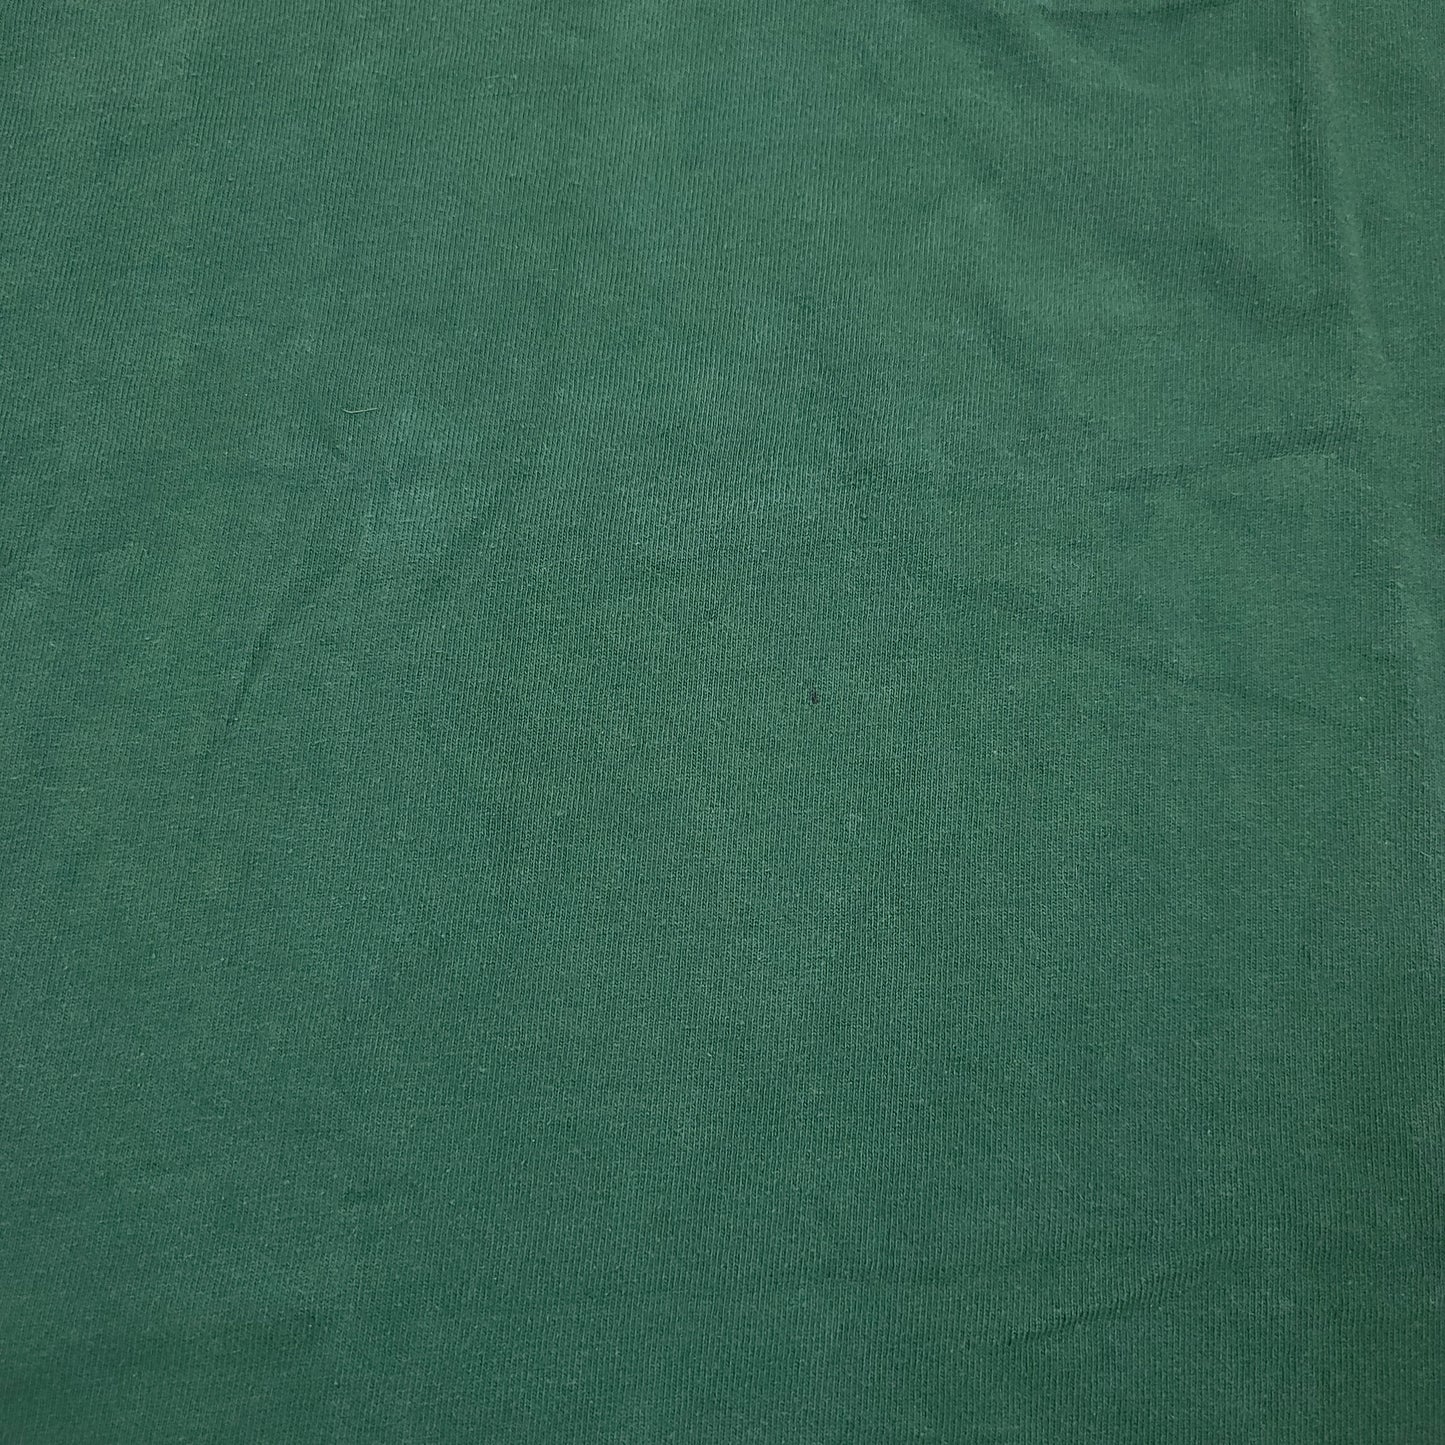 Vintage Southeastern Louisiana University Lions Green Champion Shirt